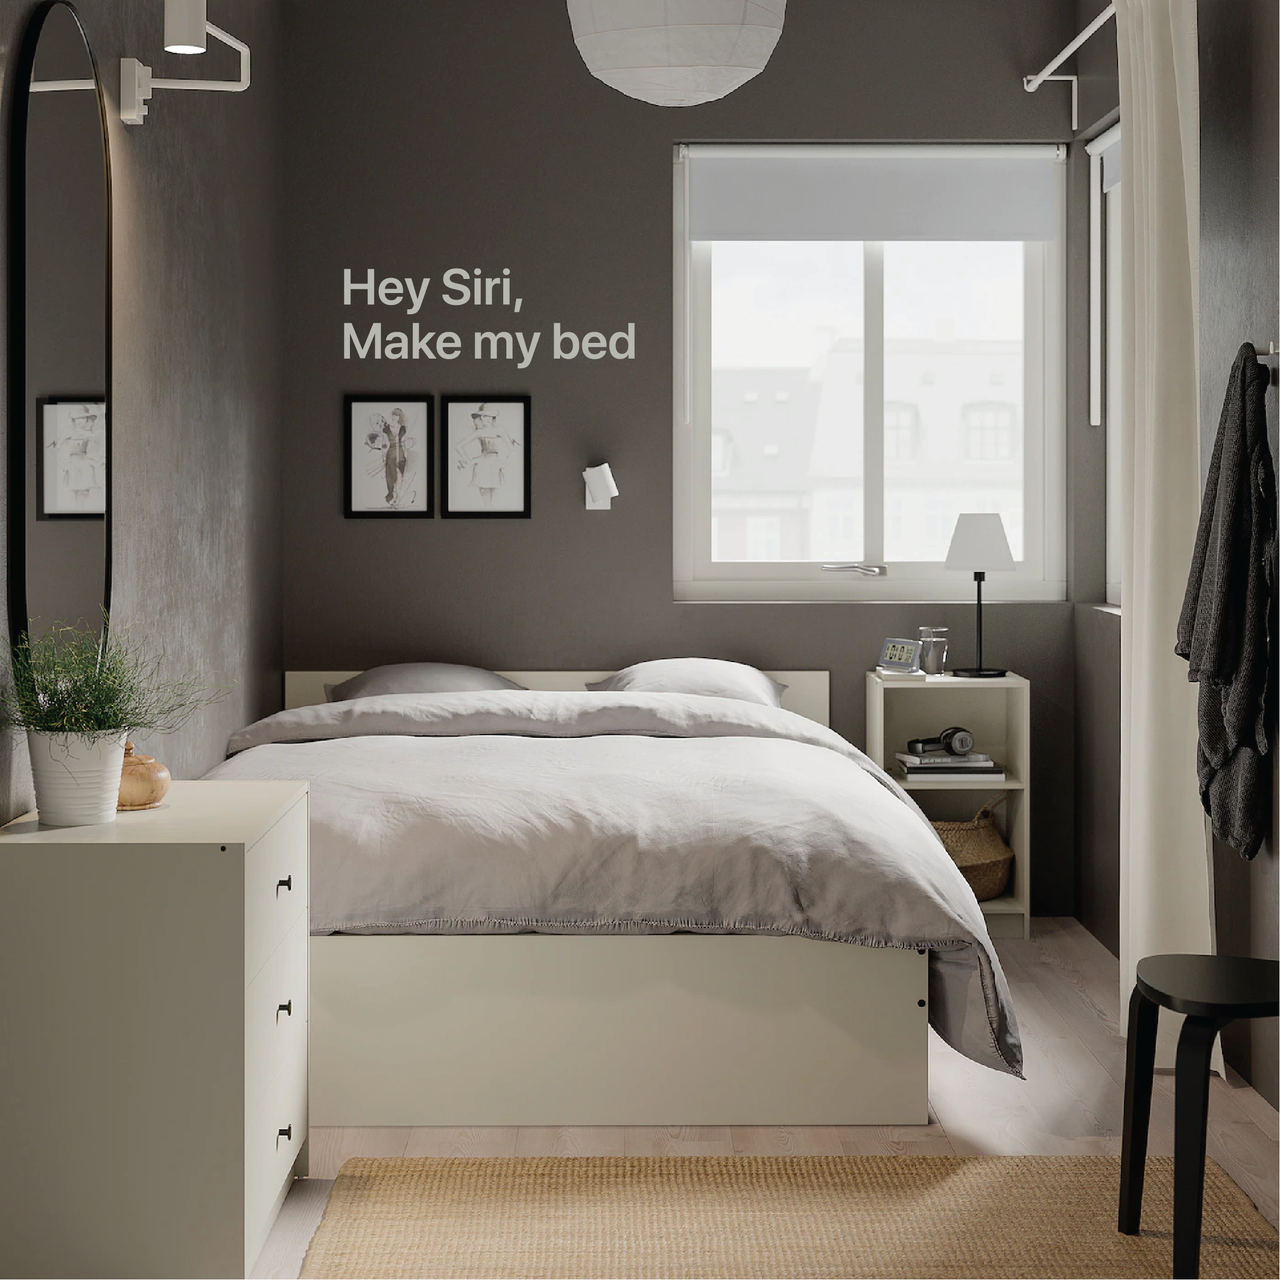 Hey Siri Make My Bed - Wall Decal